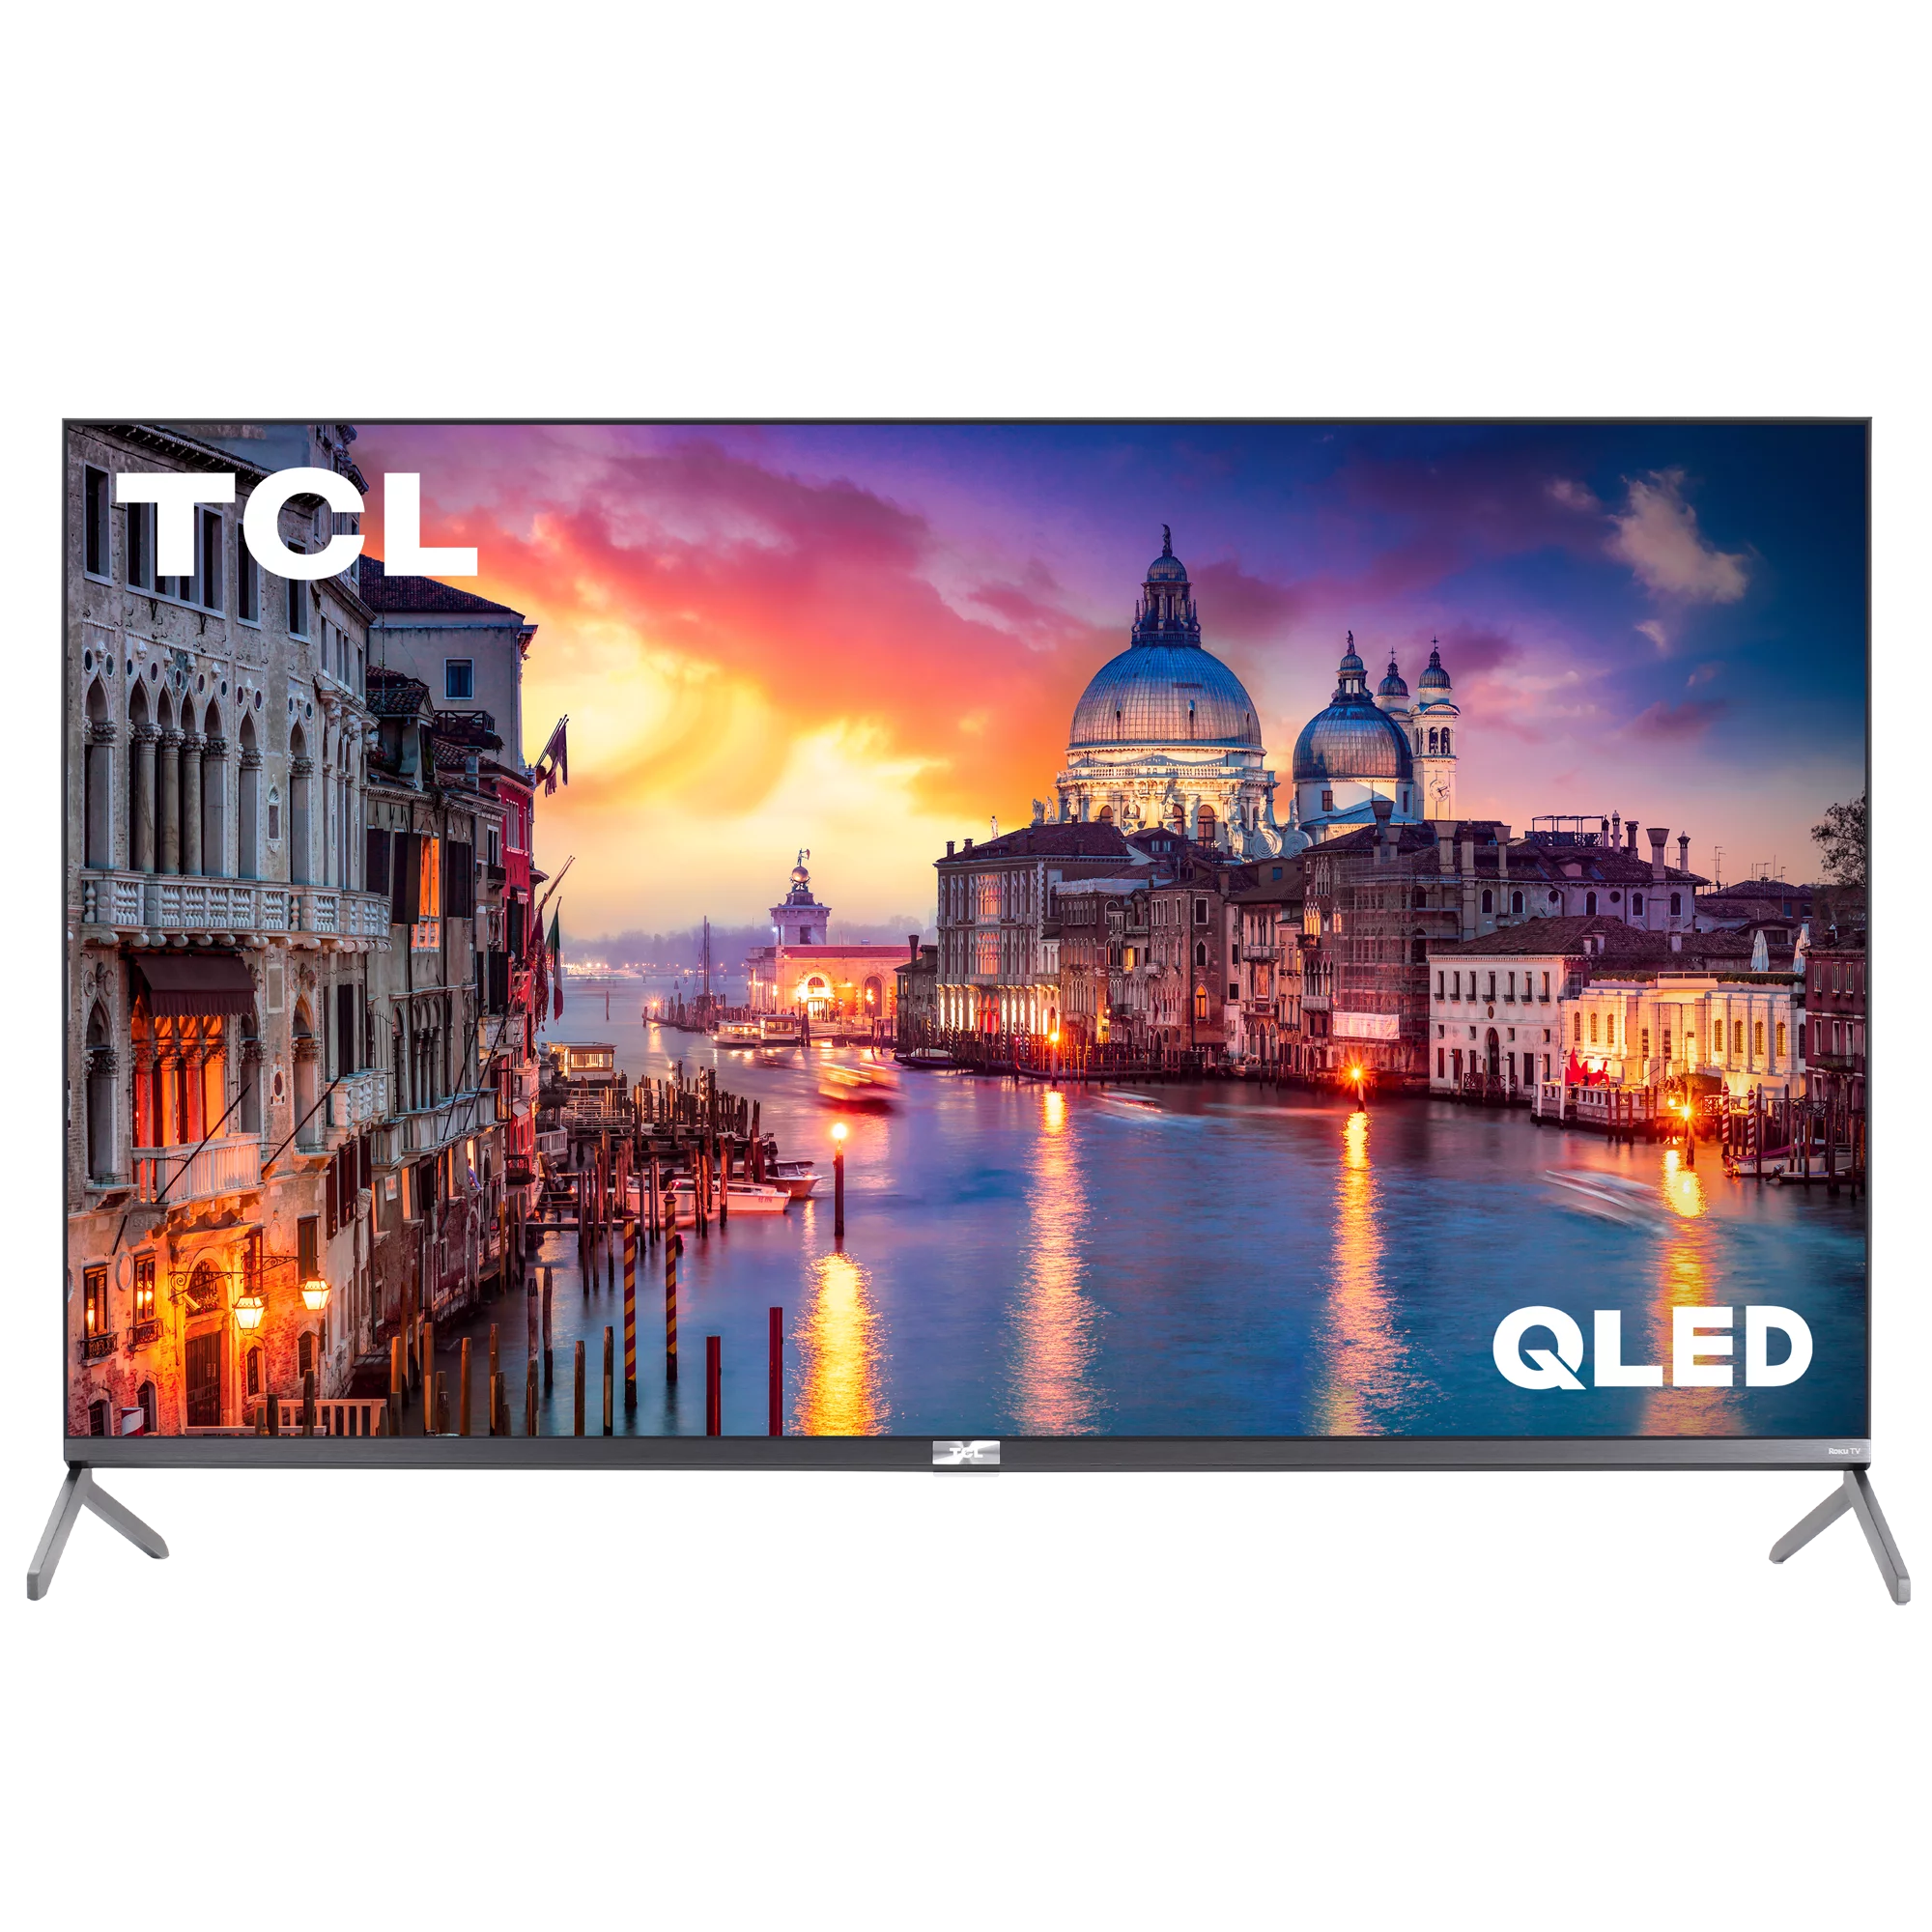 Restored TCL 65" Class 4K Ultra HD (2160p) Dolby Vision HDR Roku Smart QLED TV (65R625-B) (Refurbished)